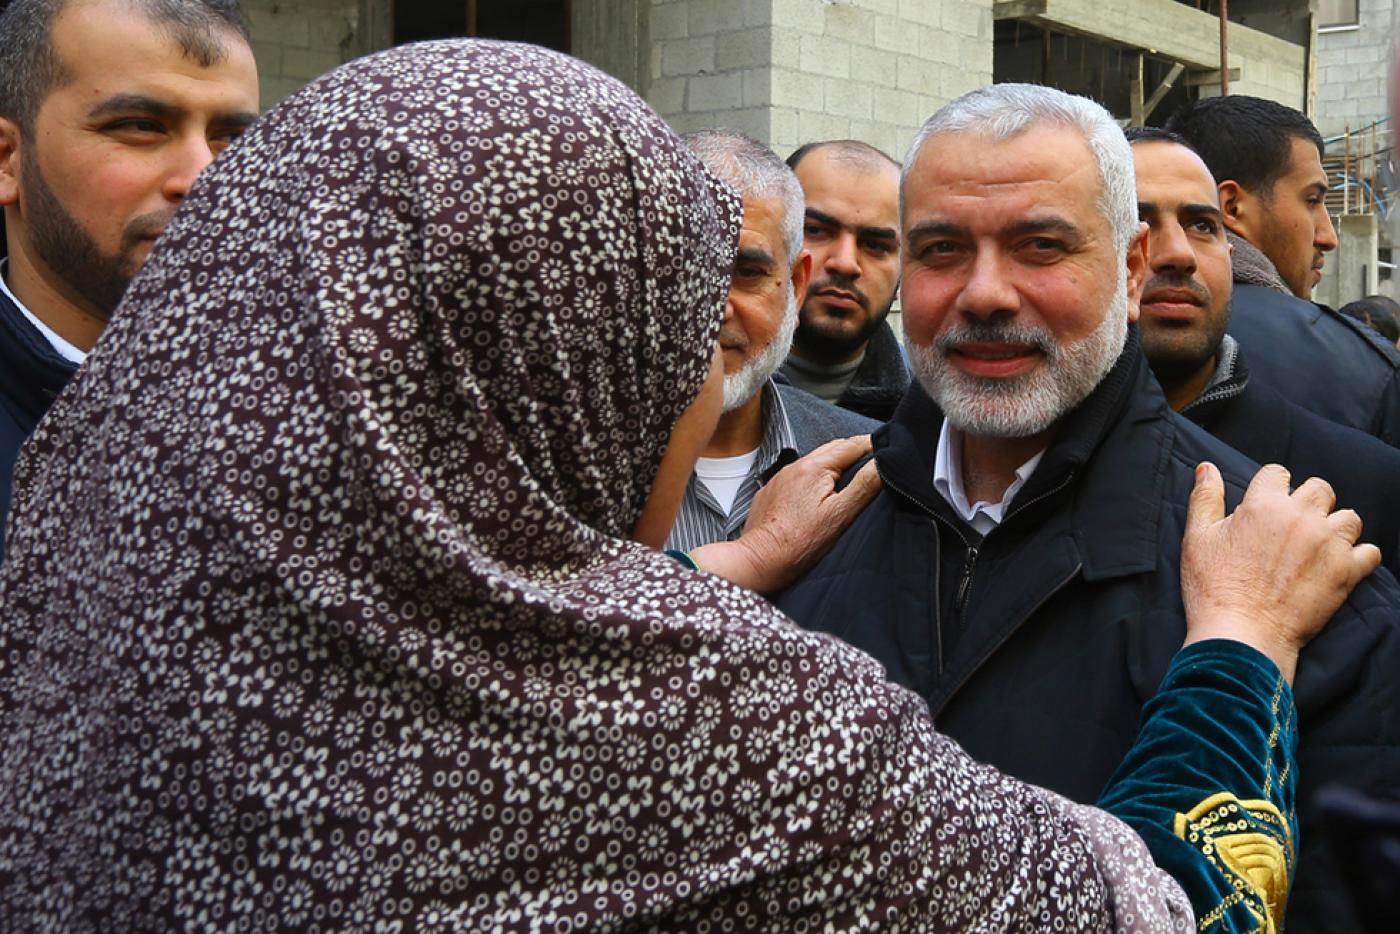  الإفراج عن 8 فلسطينيين كانوا مختطفين بمصر.. Hamas-leader-Ismail-Haniya-is-greeted-by-supporters-in-Gaza-City-in-2017-AFP